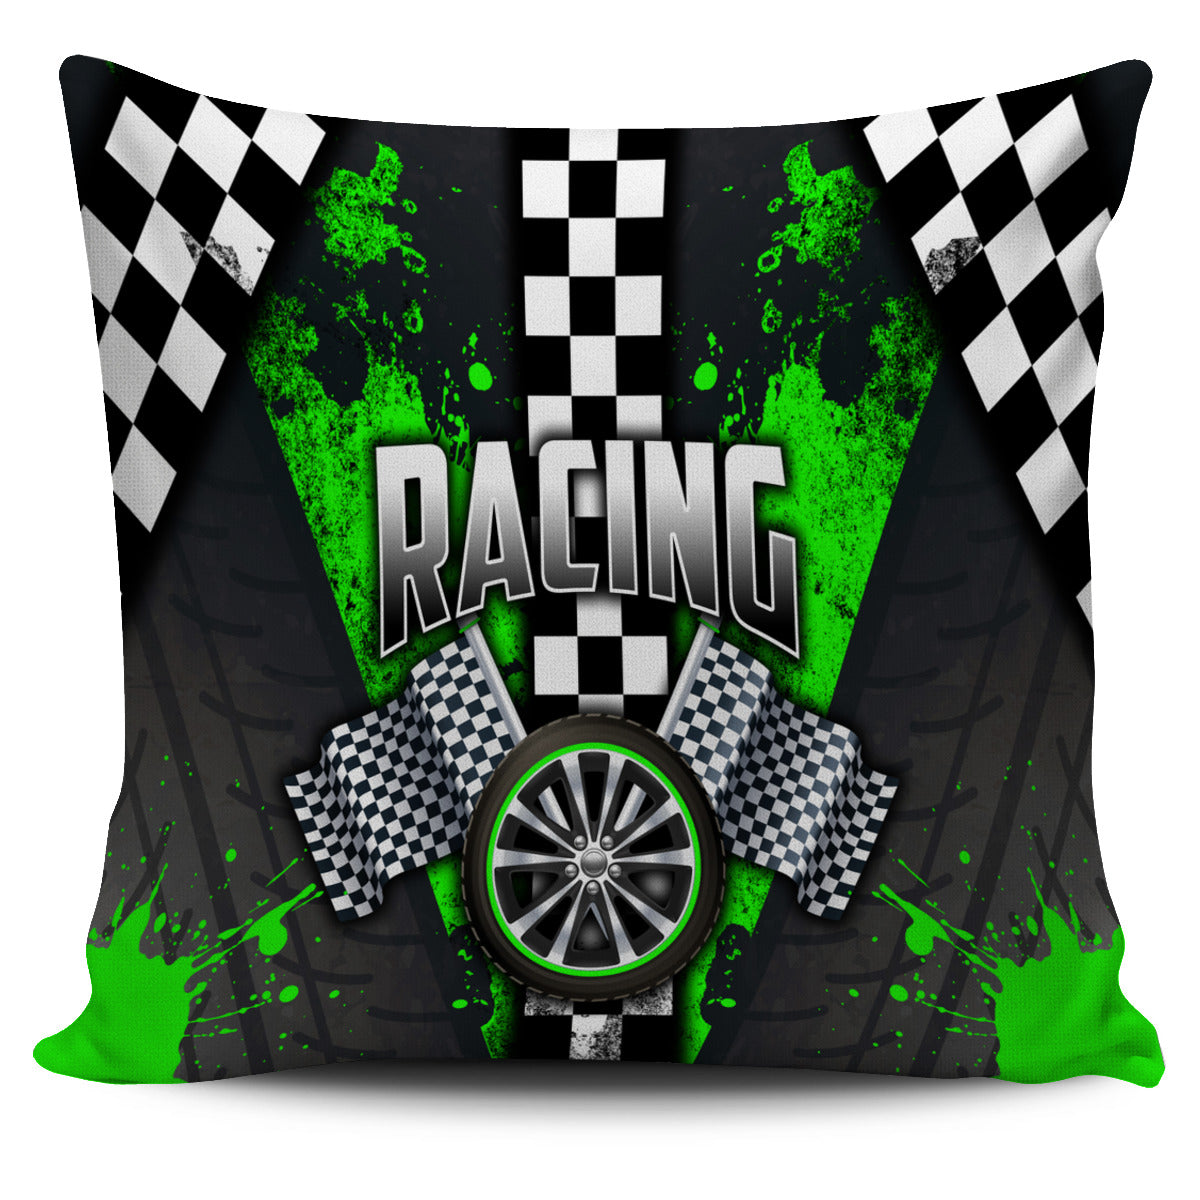 Racing Pillow Cover Pistachio